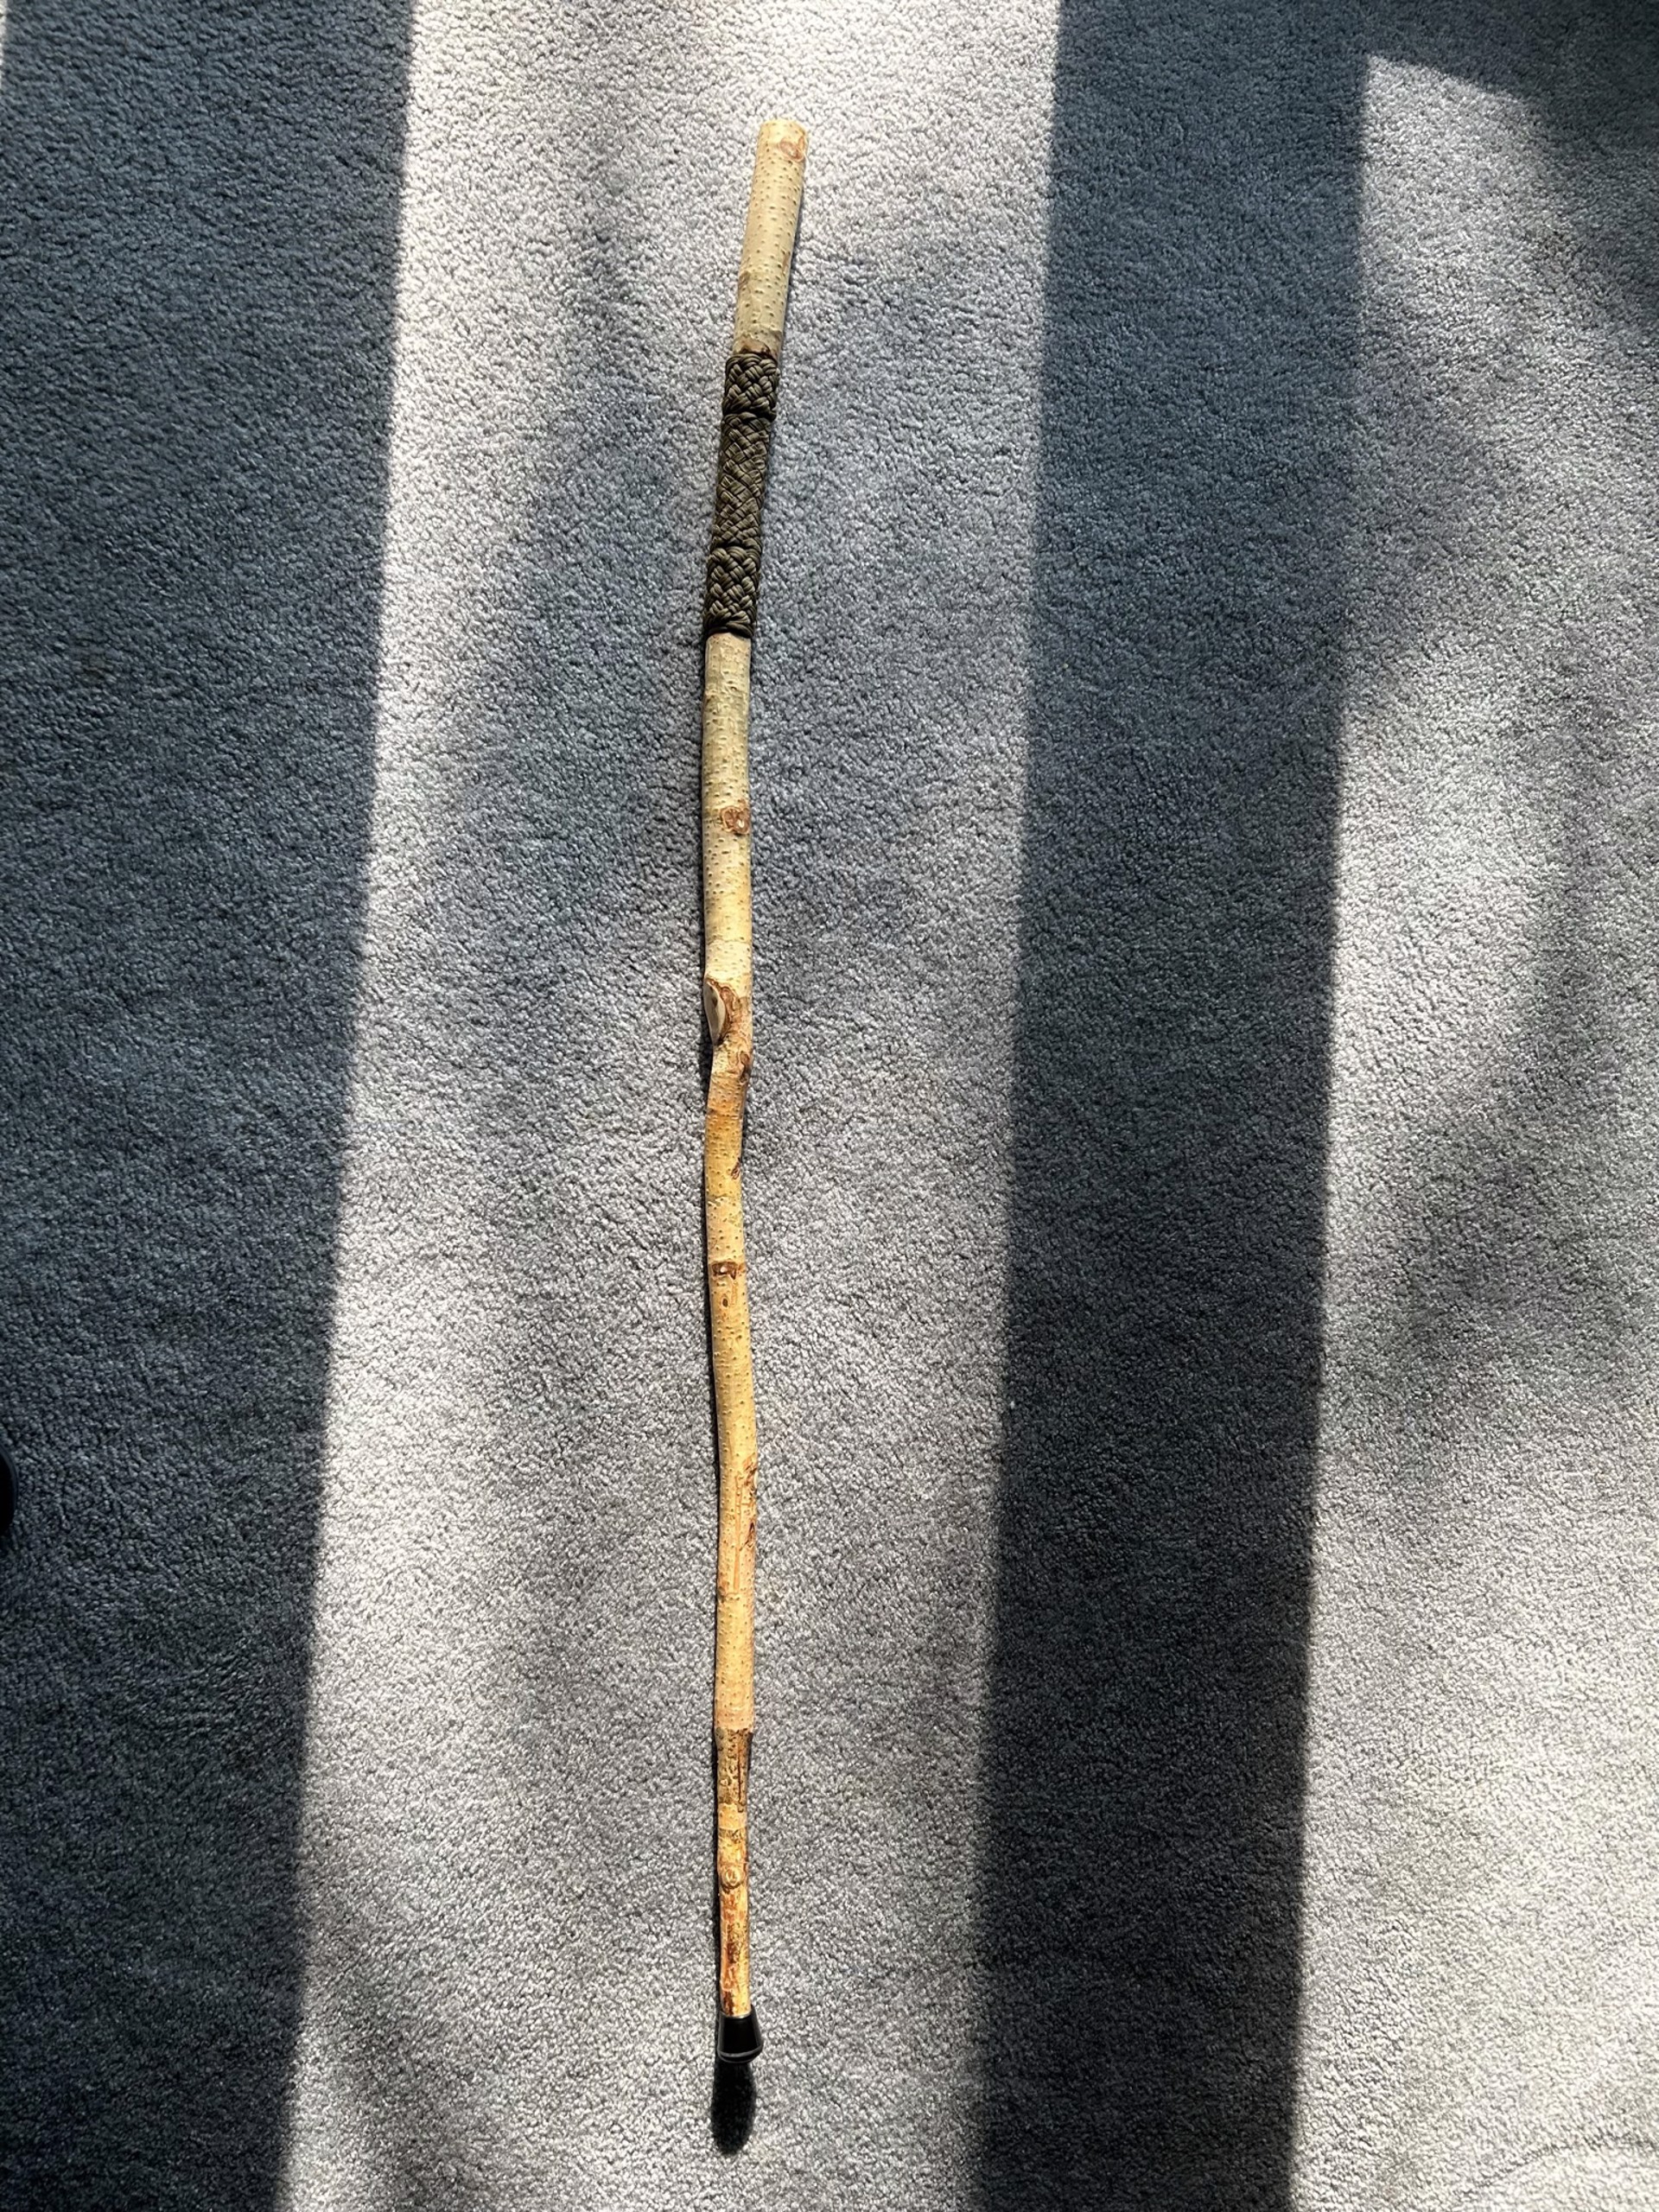 Walking Stick XVII Birch by John Cahill